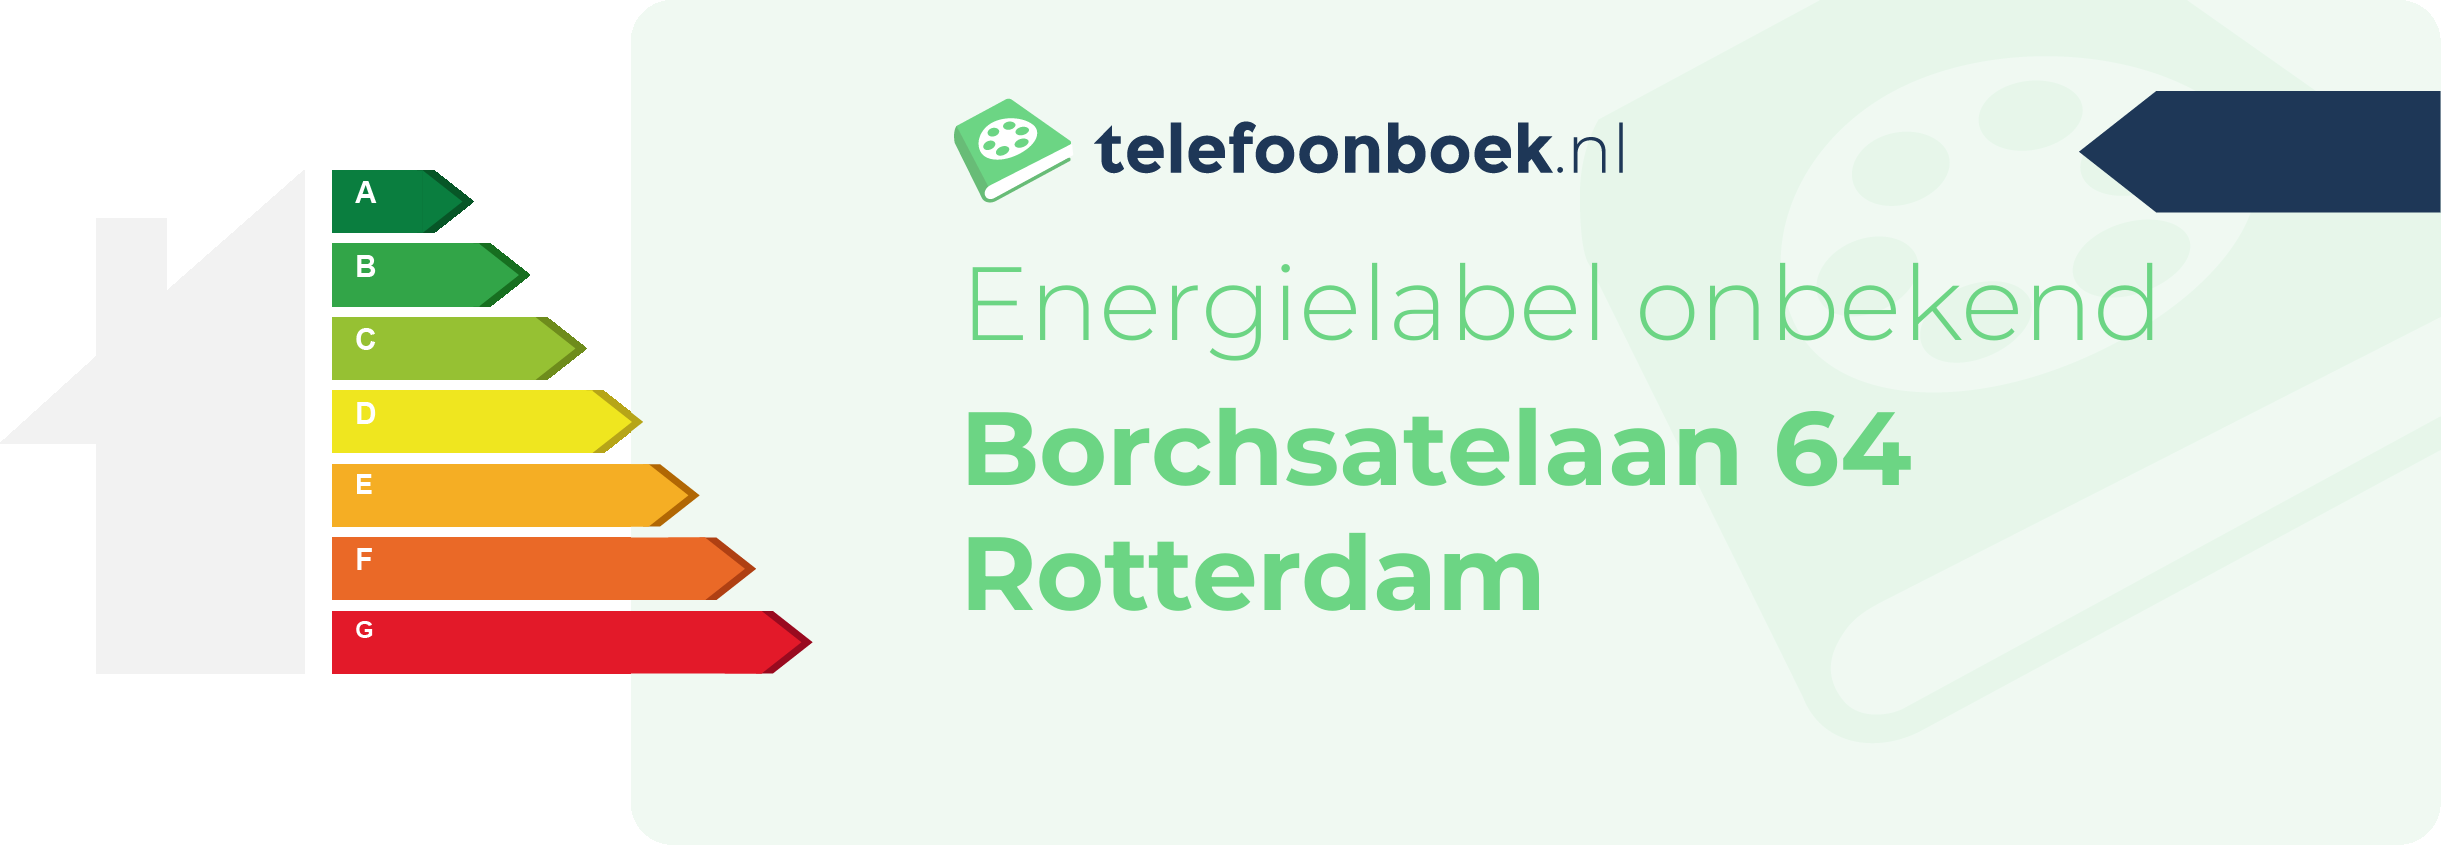 Energielabel Borchsatelaan 64 Rotterdam